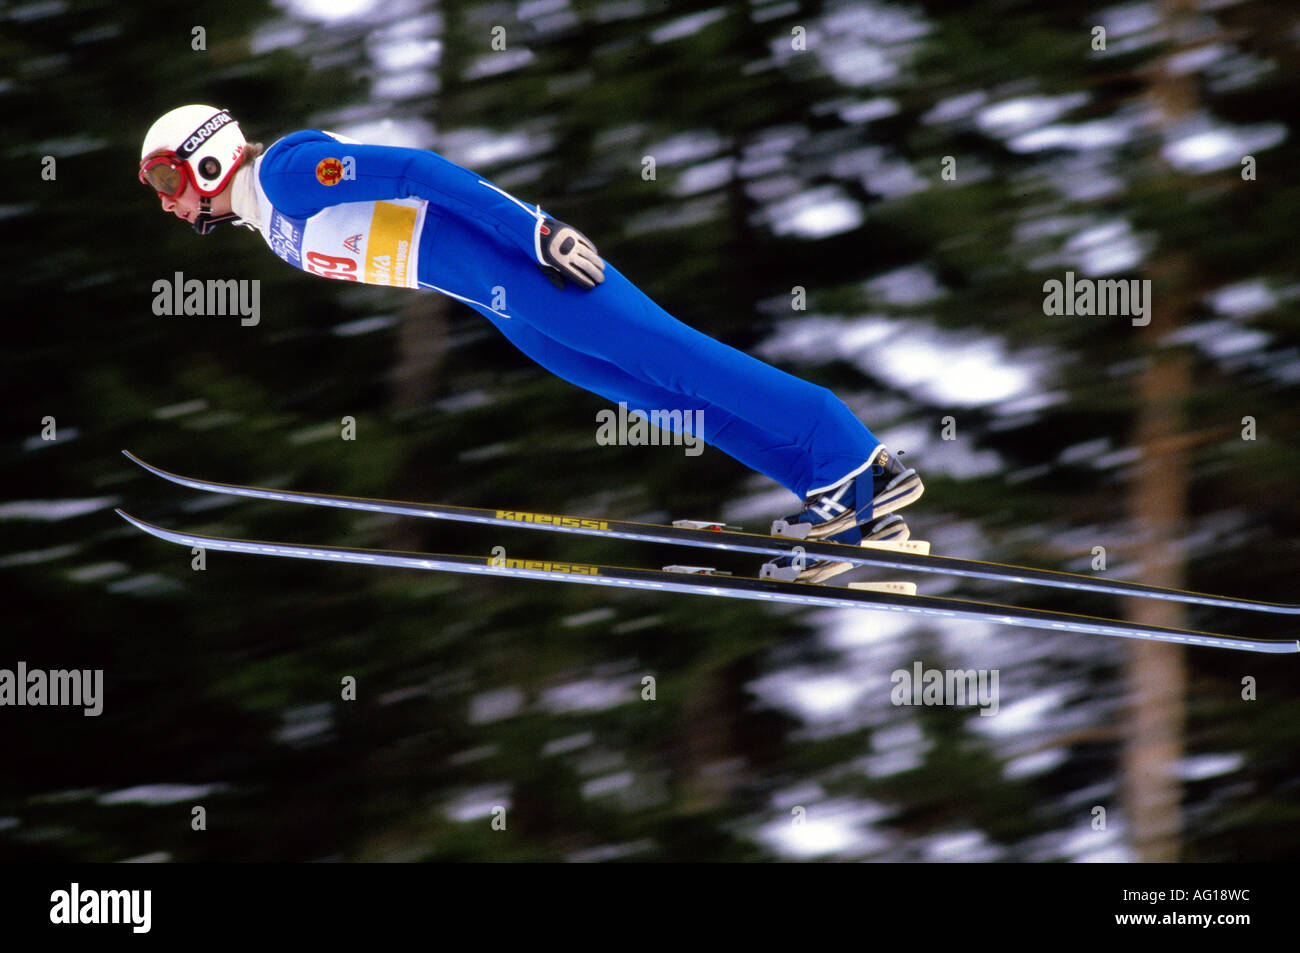 German Athlete Ski Jumping Stock Photos German Athlete Ski inside ski jumping klingenthal results with regard to Warm